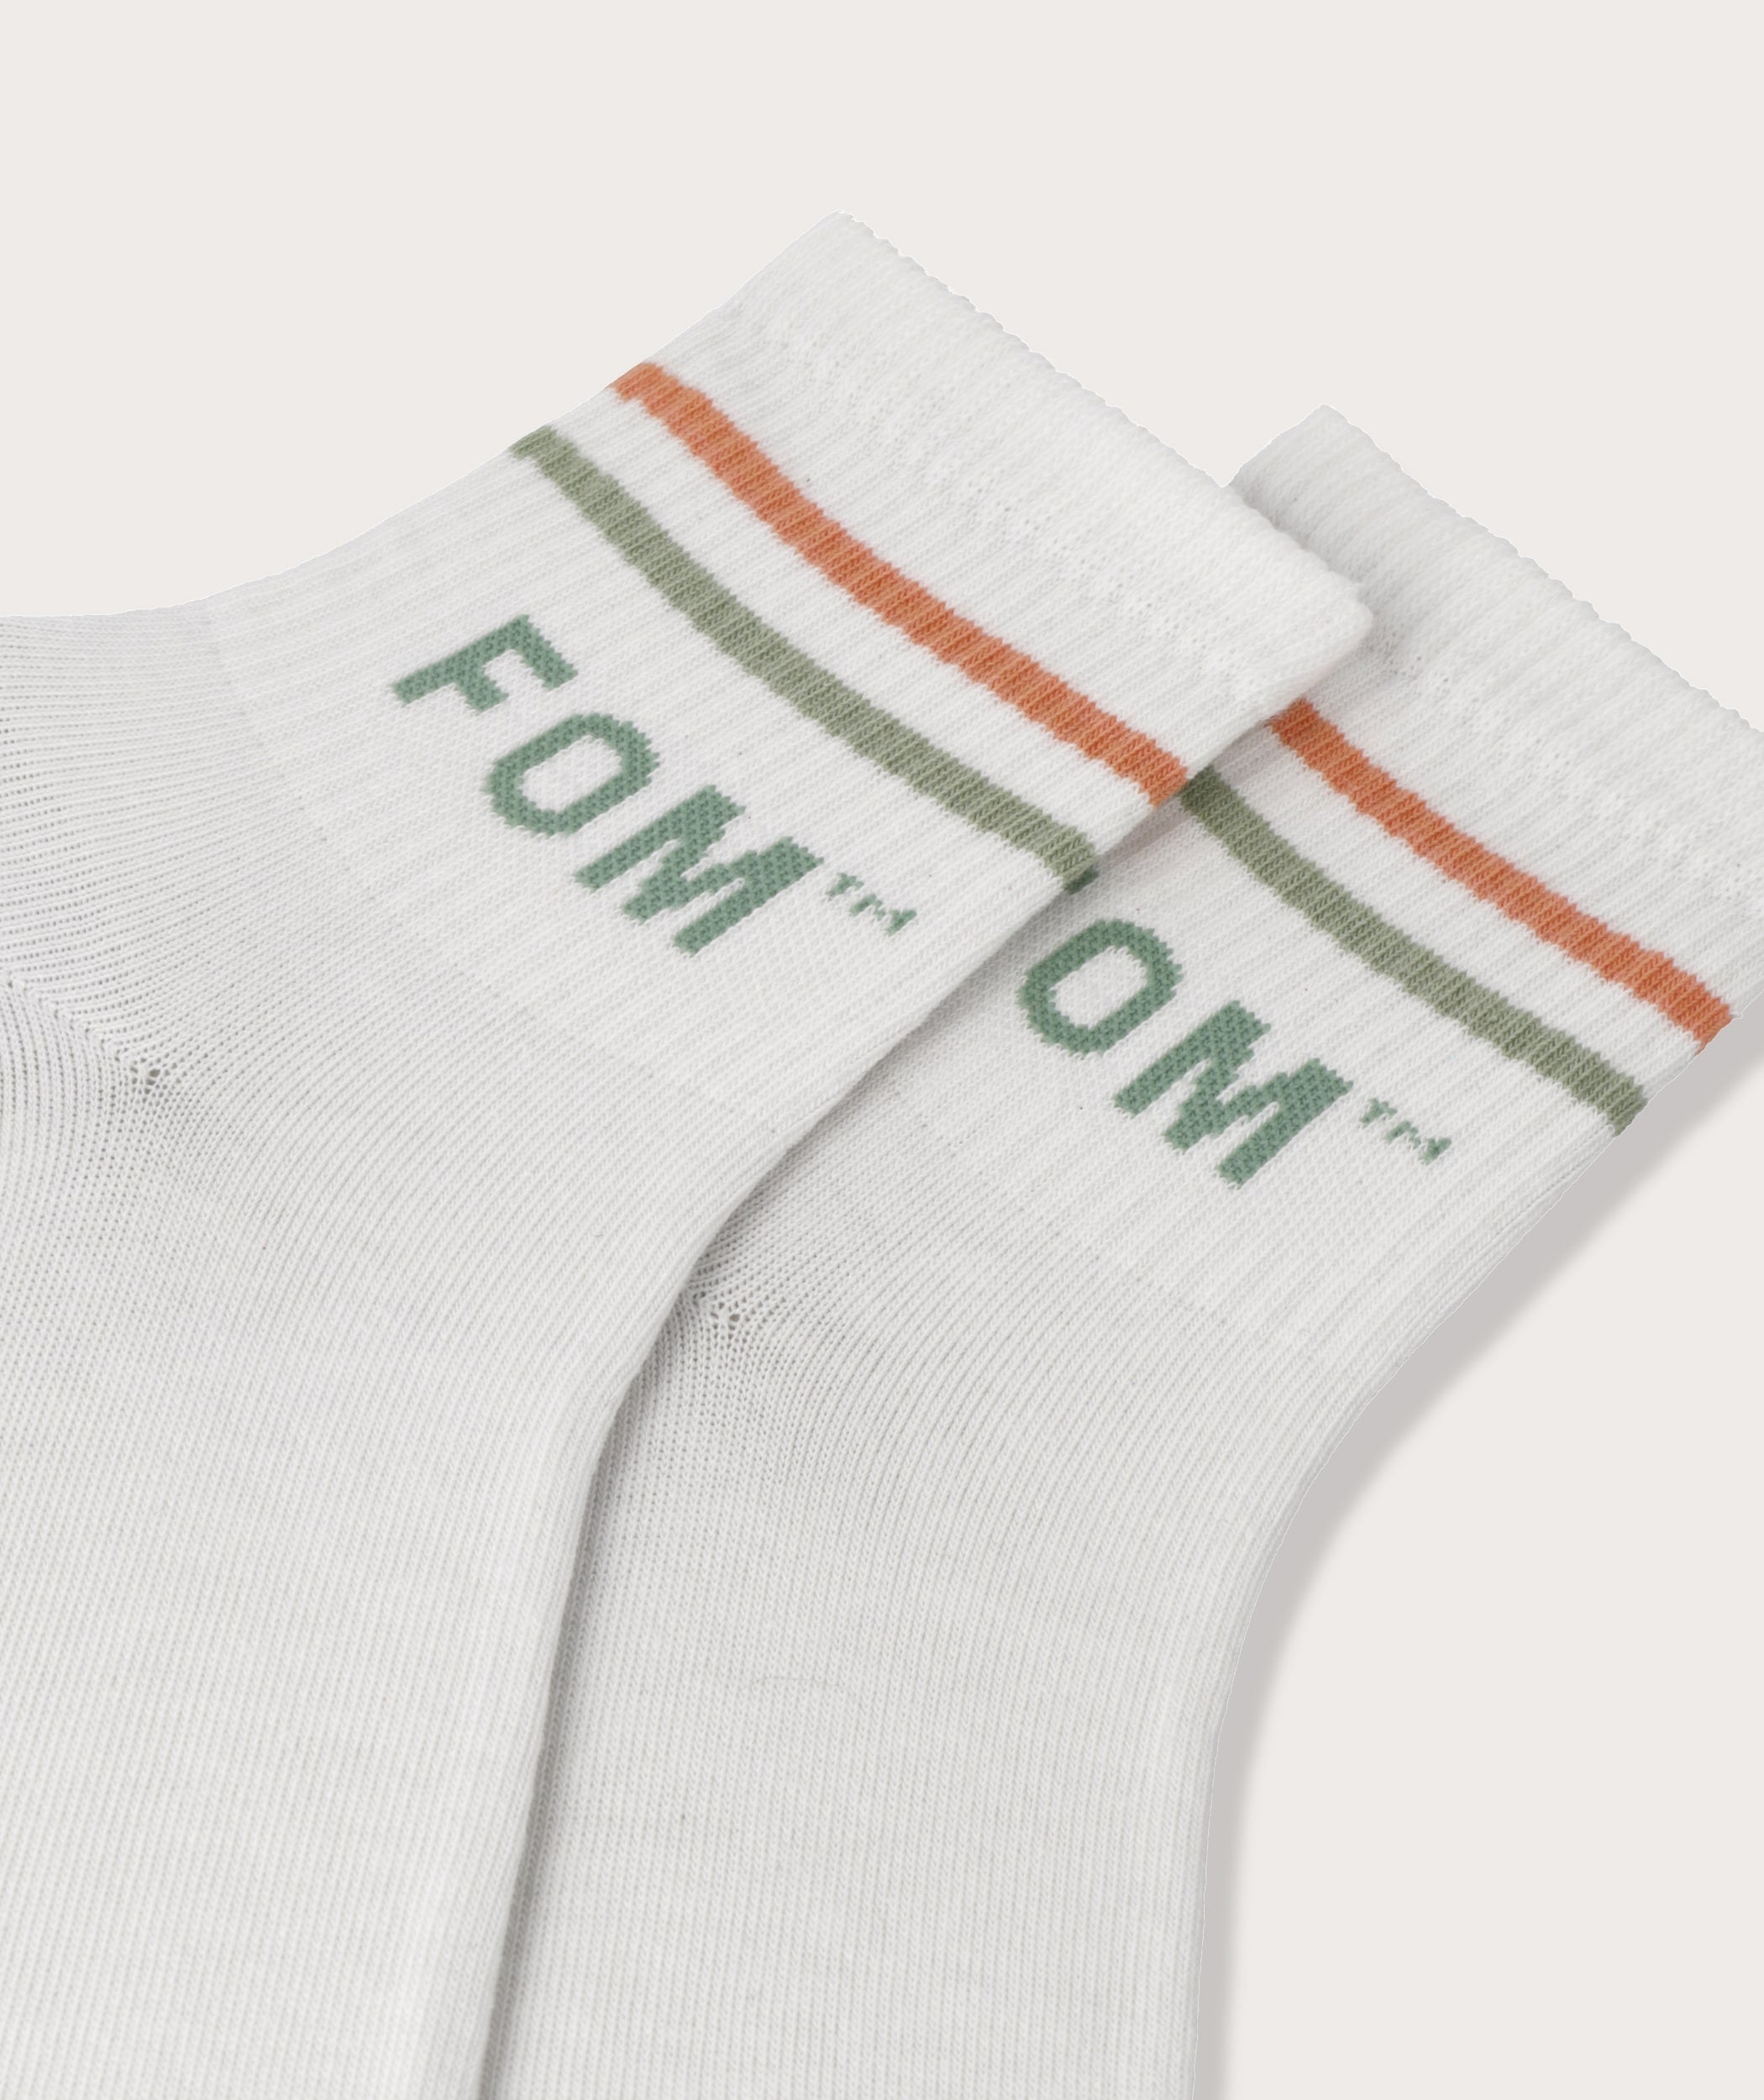 Socks FOM Active Beige/ Peach & Lime Stripes (Size 4-7)